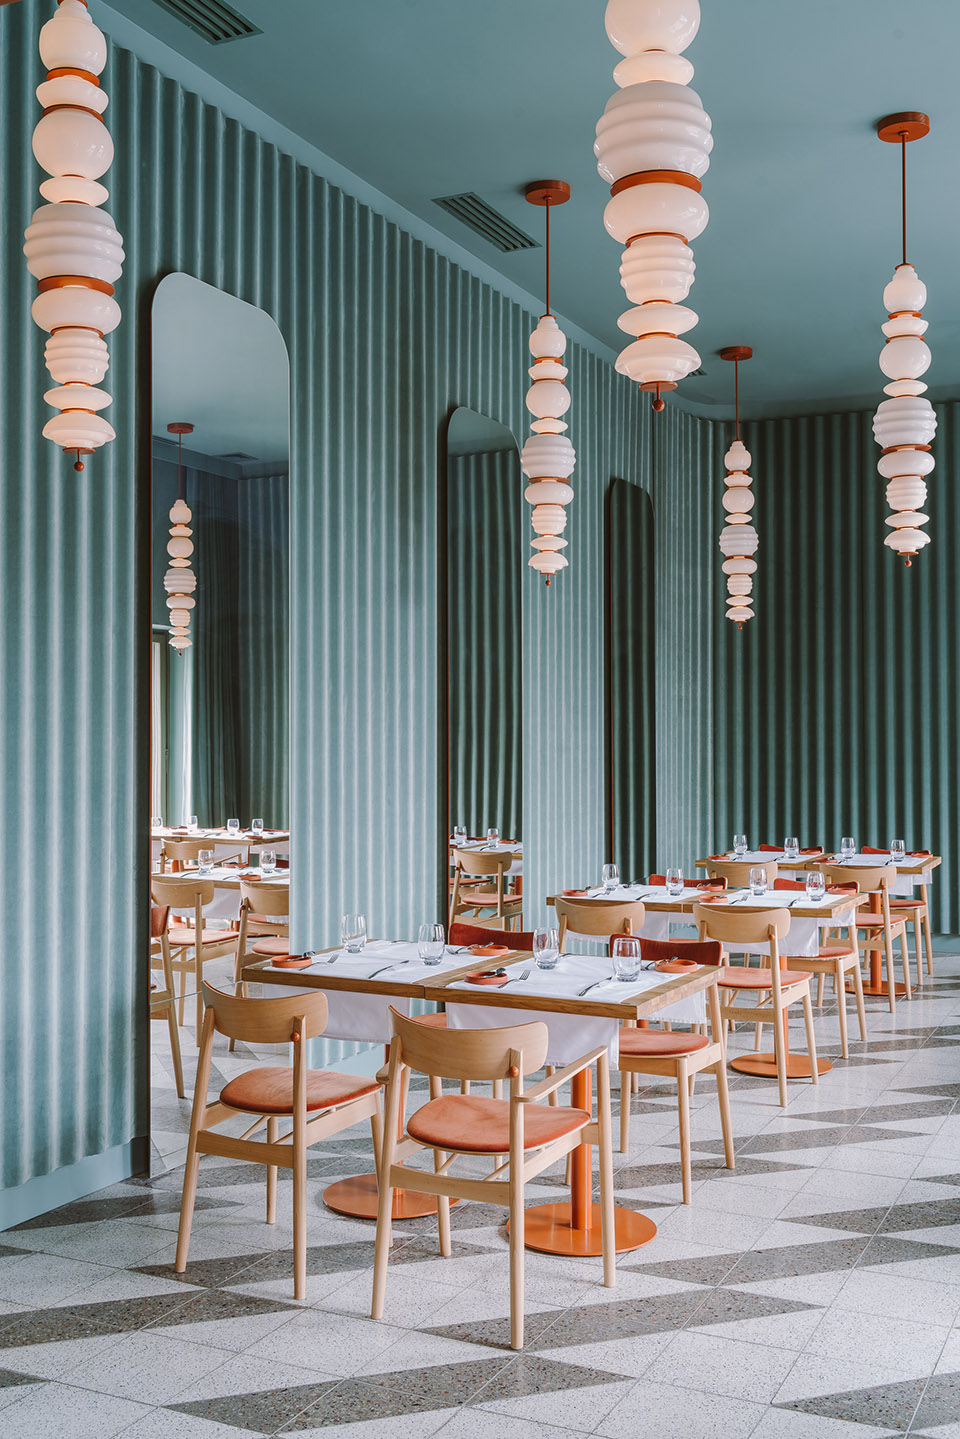 OPASLY TOM餐厅，华沙/丰富的色彩、饰面和纹理空间下的用餐体验-12